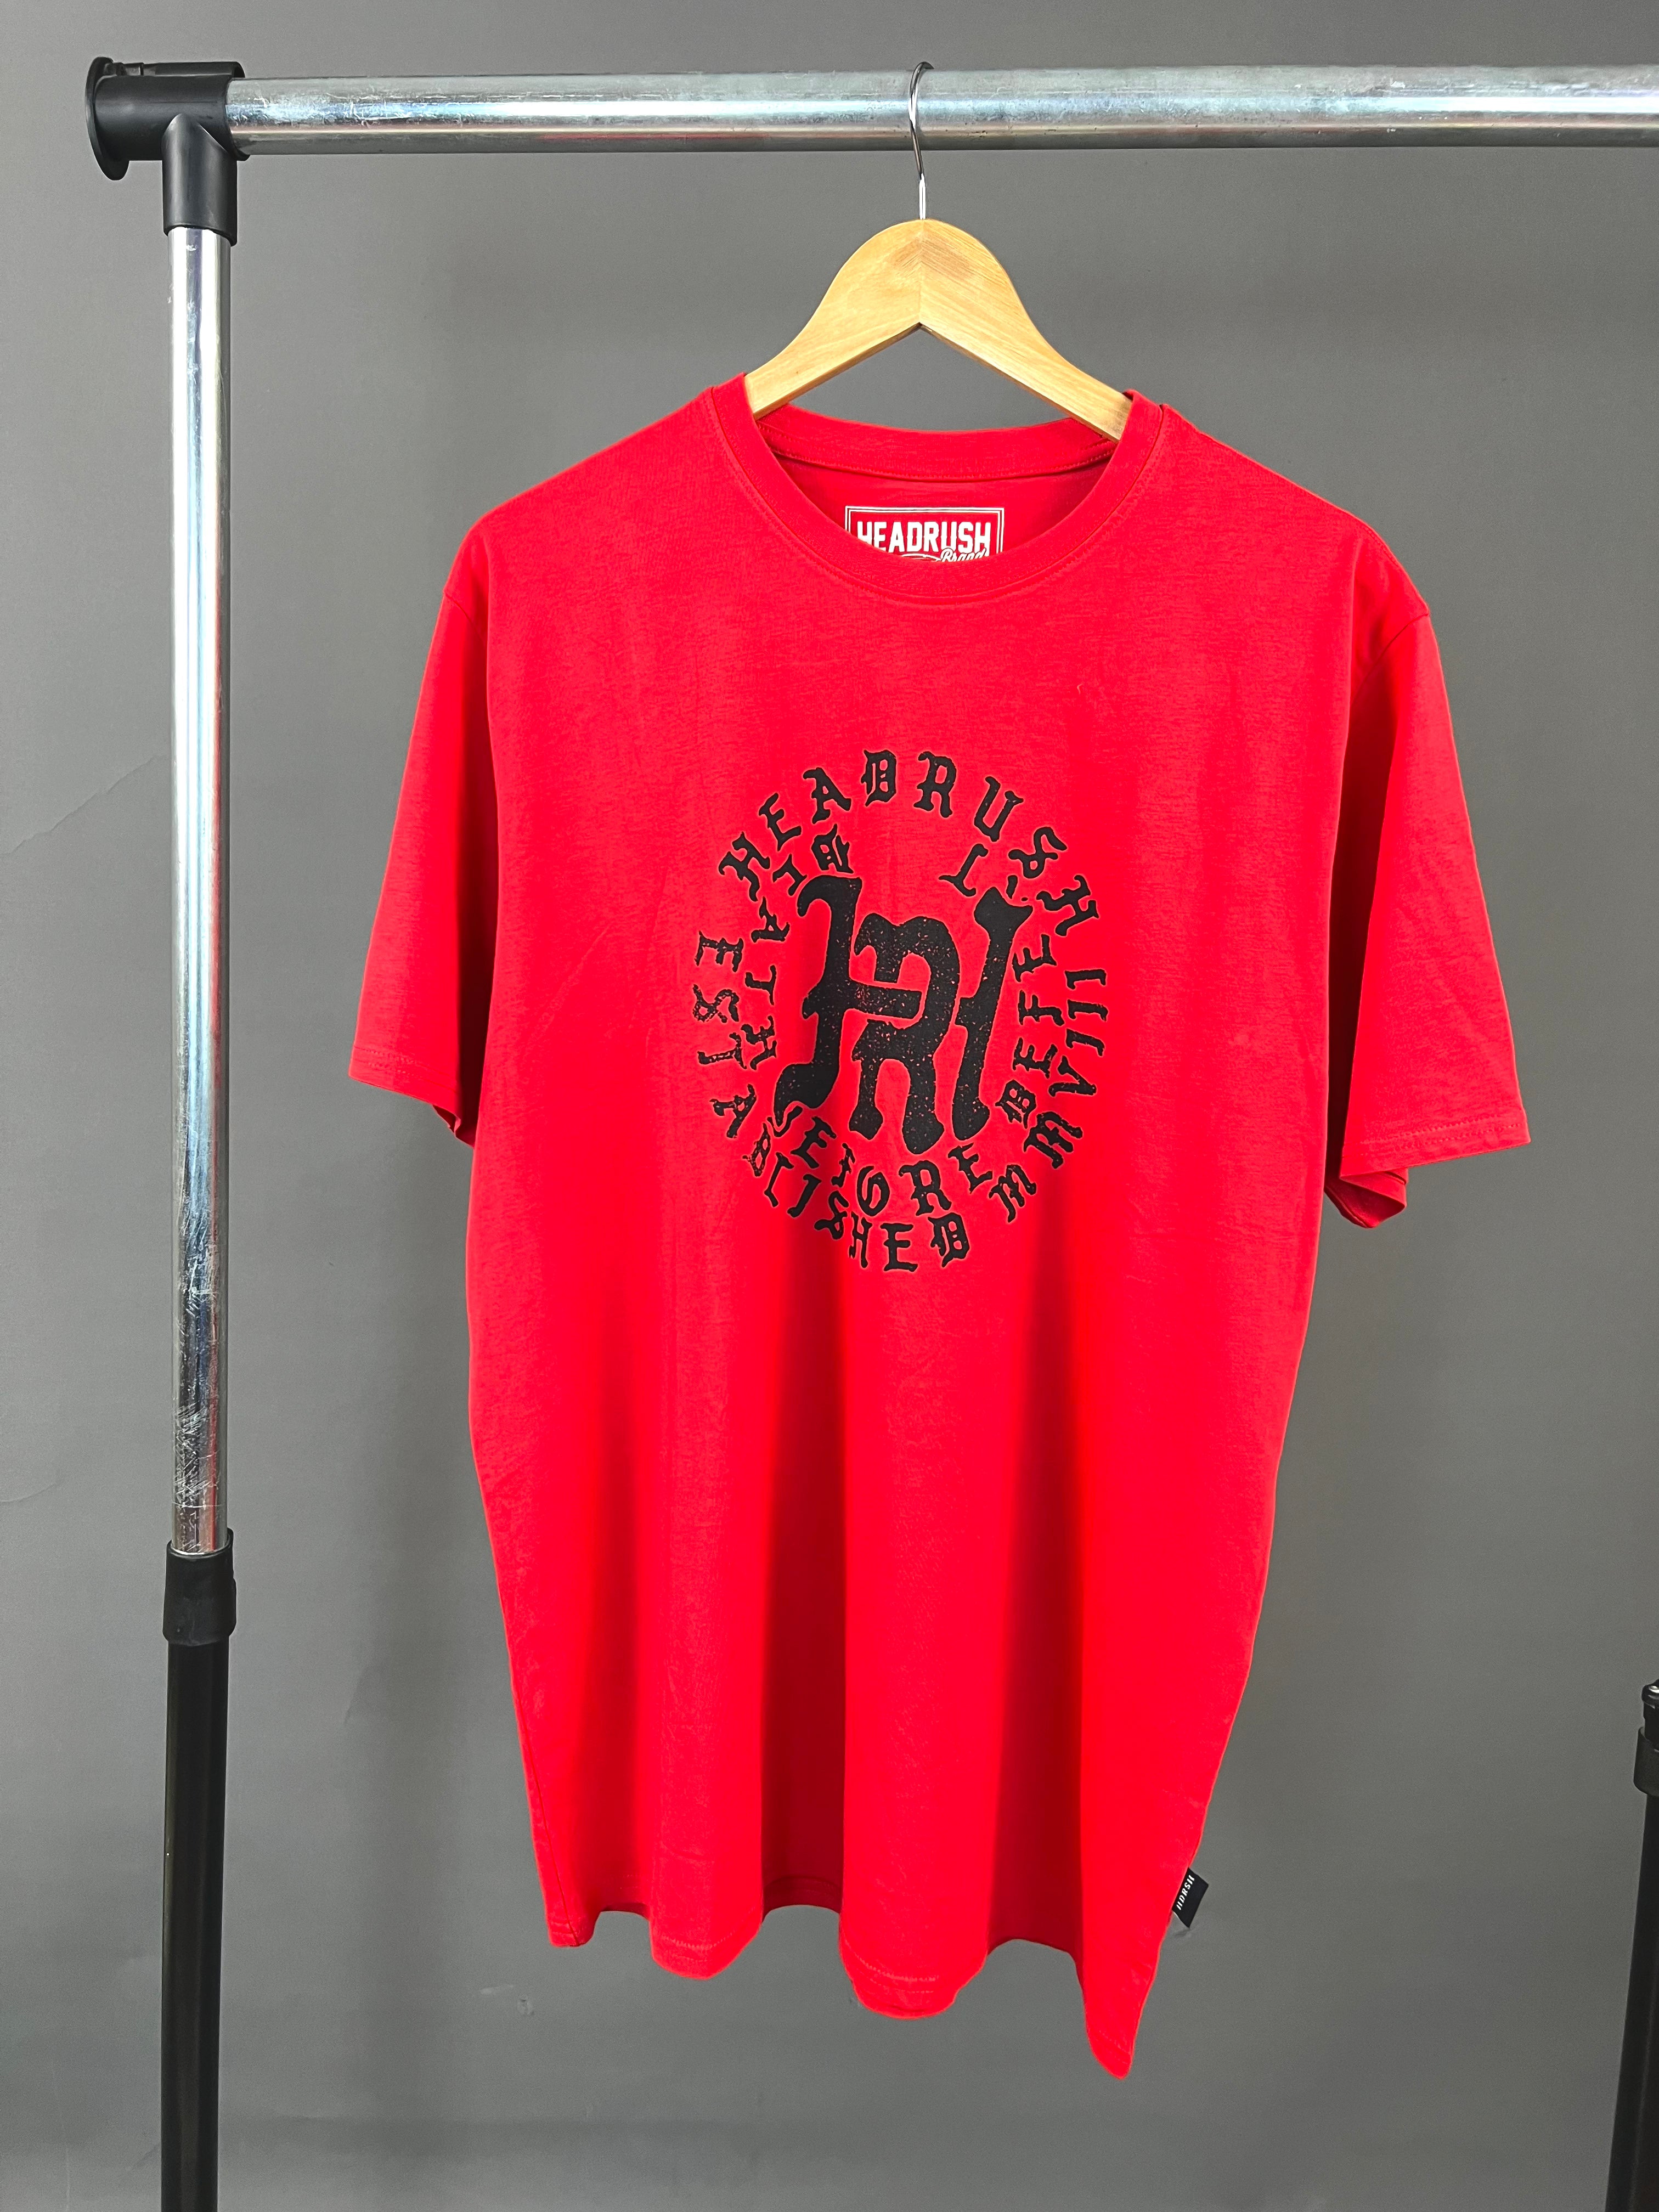 Headrush backprint text t-shirt in red – Garmisland